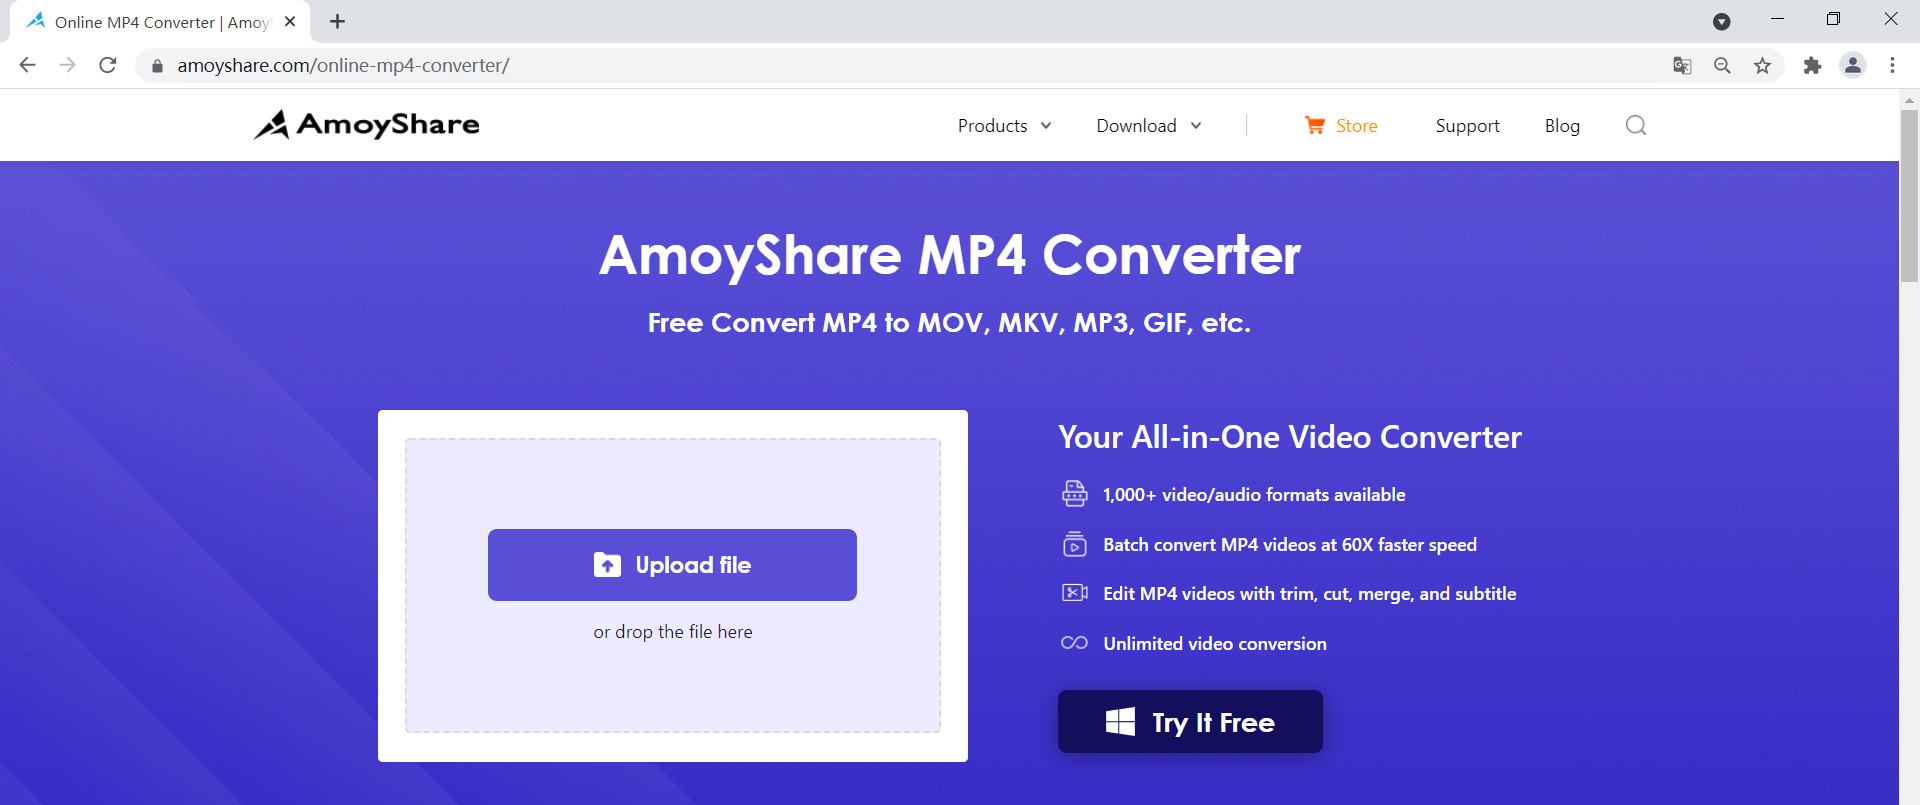 Upload the WebM file to AmoyShare MP4 Converter